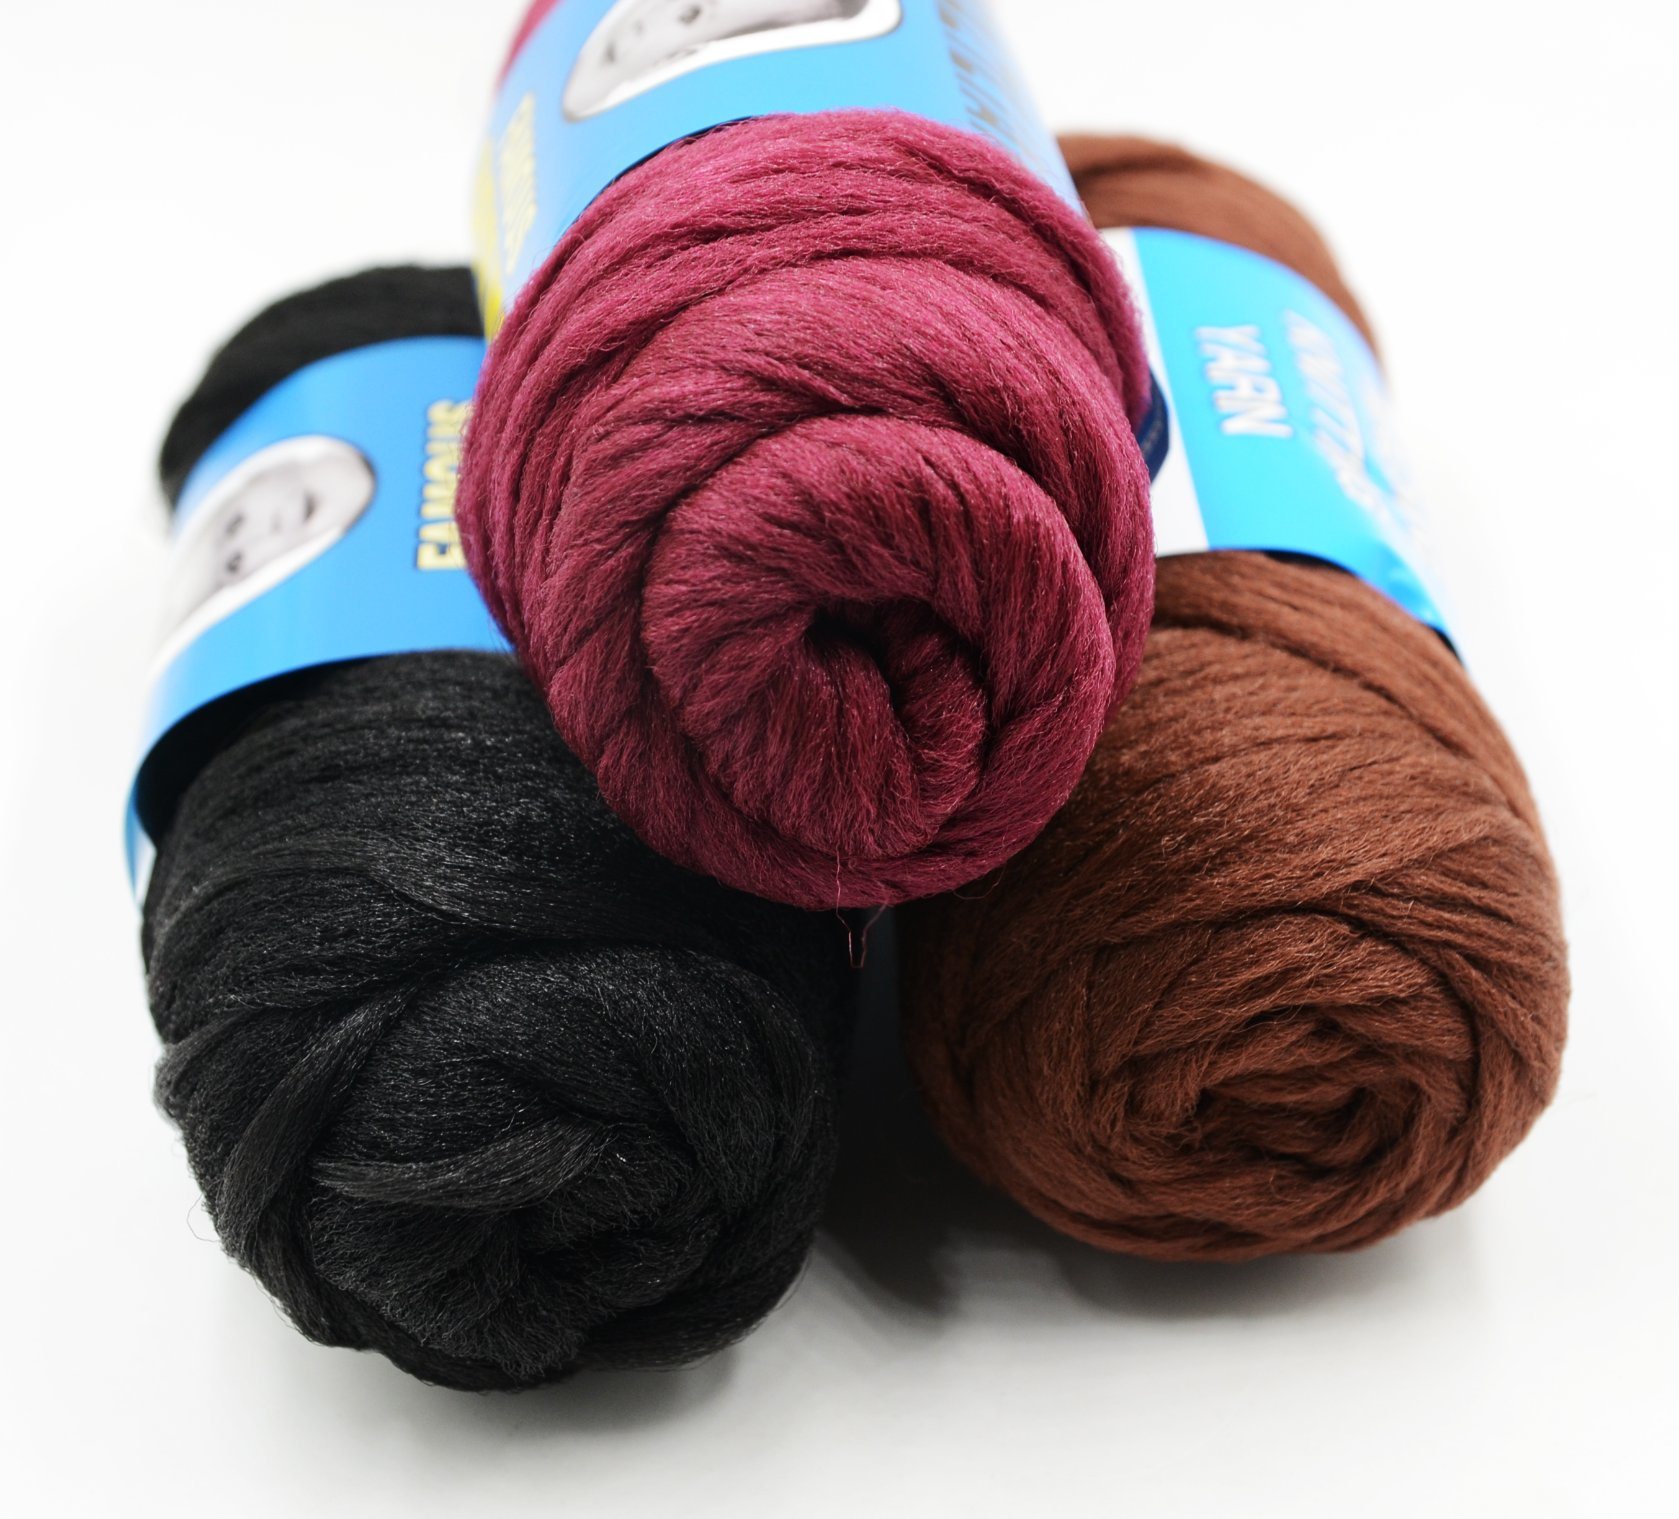 High Quality 100% Polypropylene Yarn Brazil Wool Hair Knitting Yarn for African Synthetic Braiding Hair